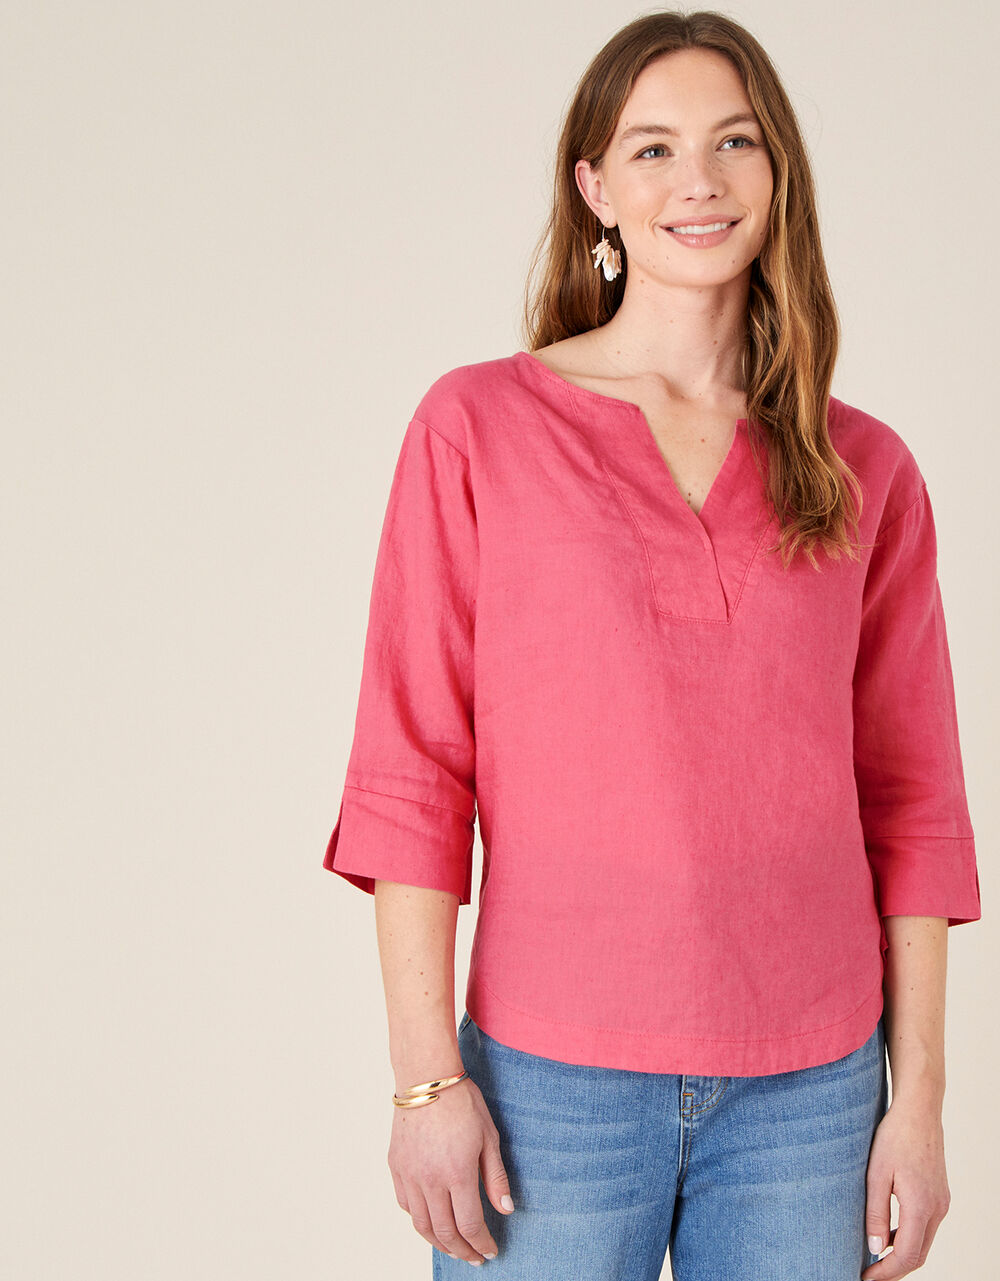 Women Women's Clothing | Daisy Plain T-Shirt in Pure Linen Red - AR14209